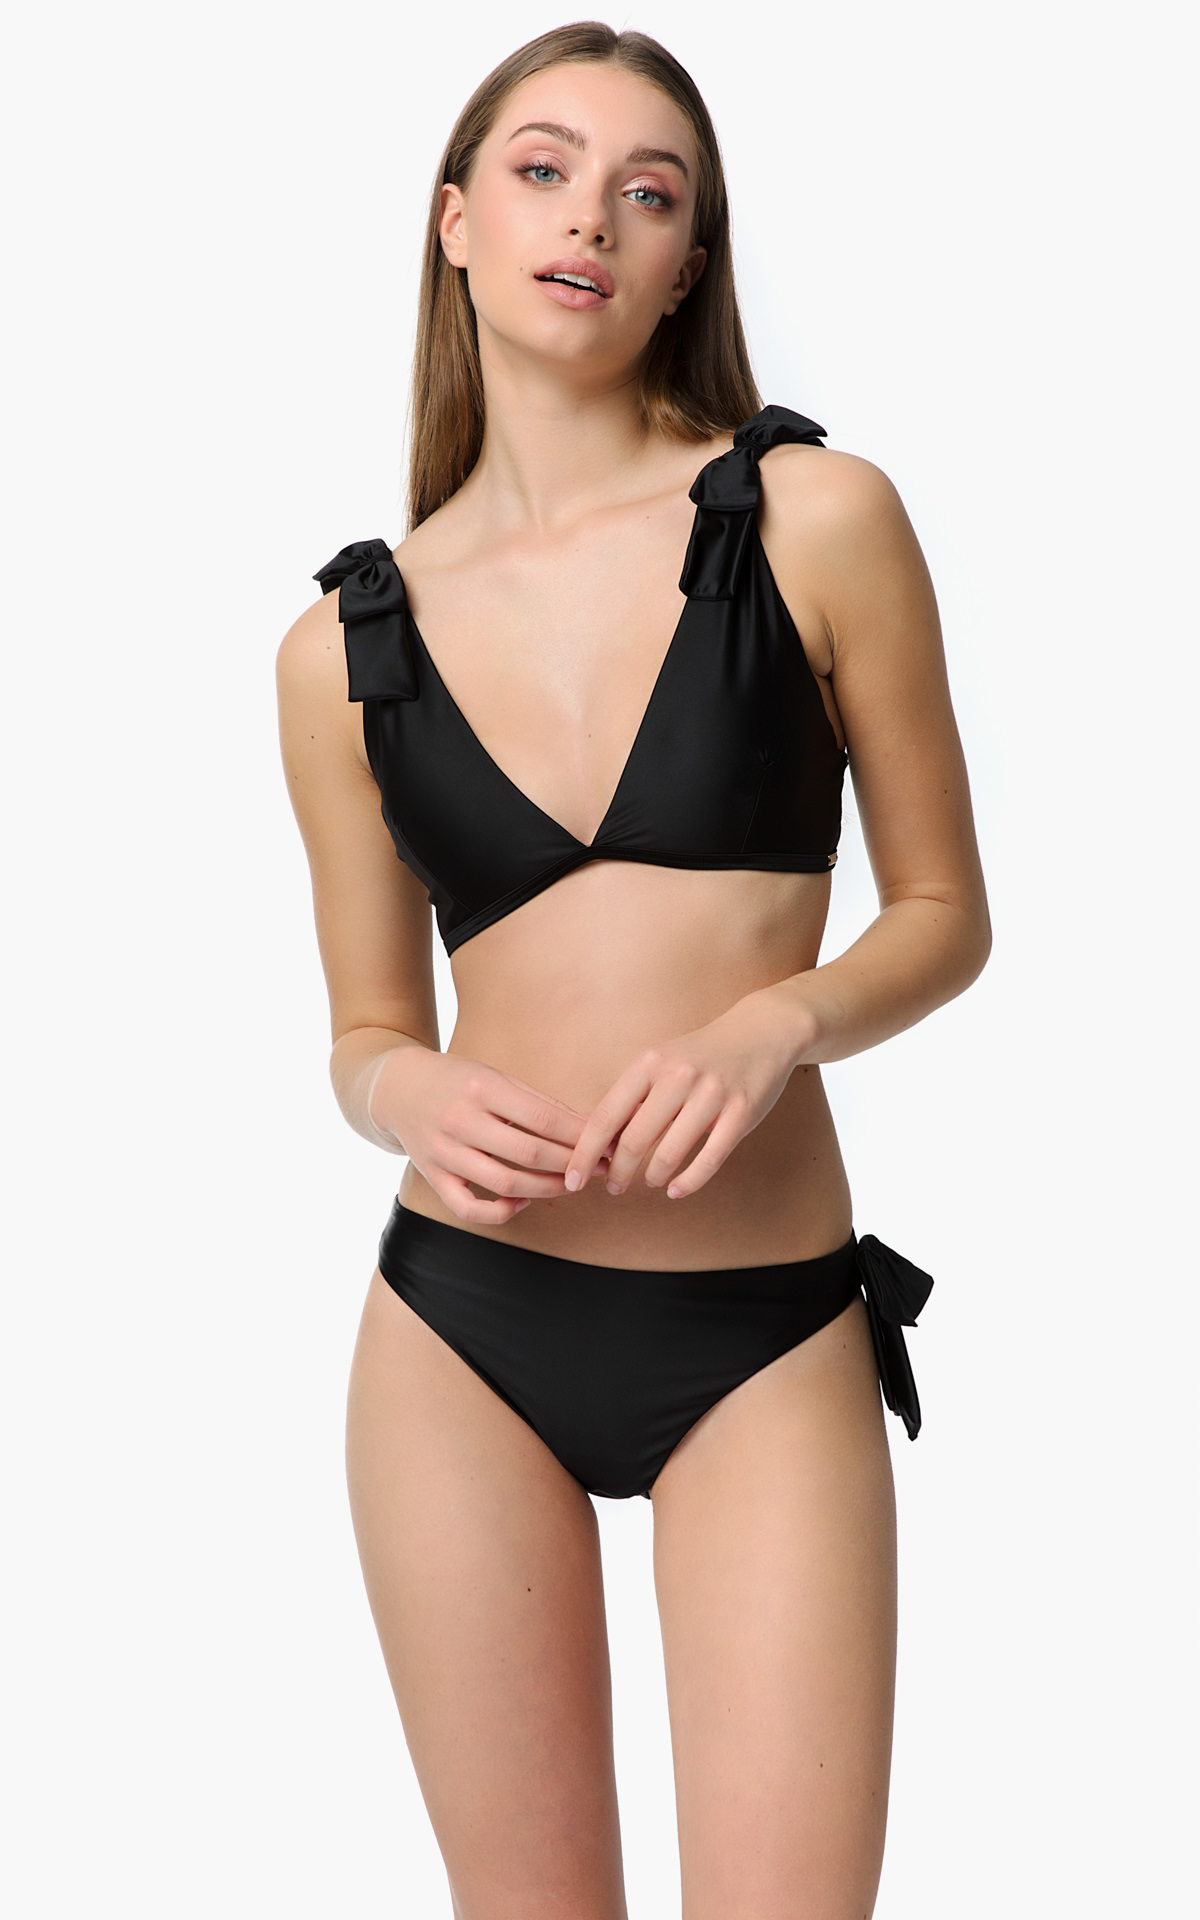 Vergina Τρίγωνο Bralette Bikini Top Μαύρο 90-9115B-045 Μαύρο